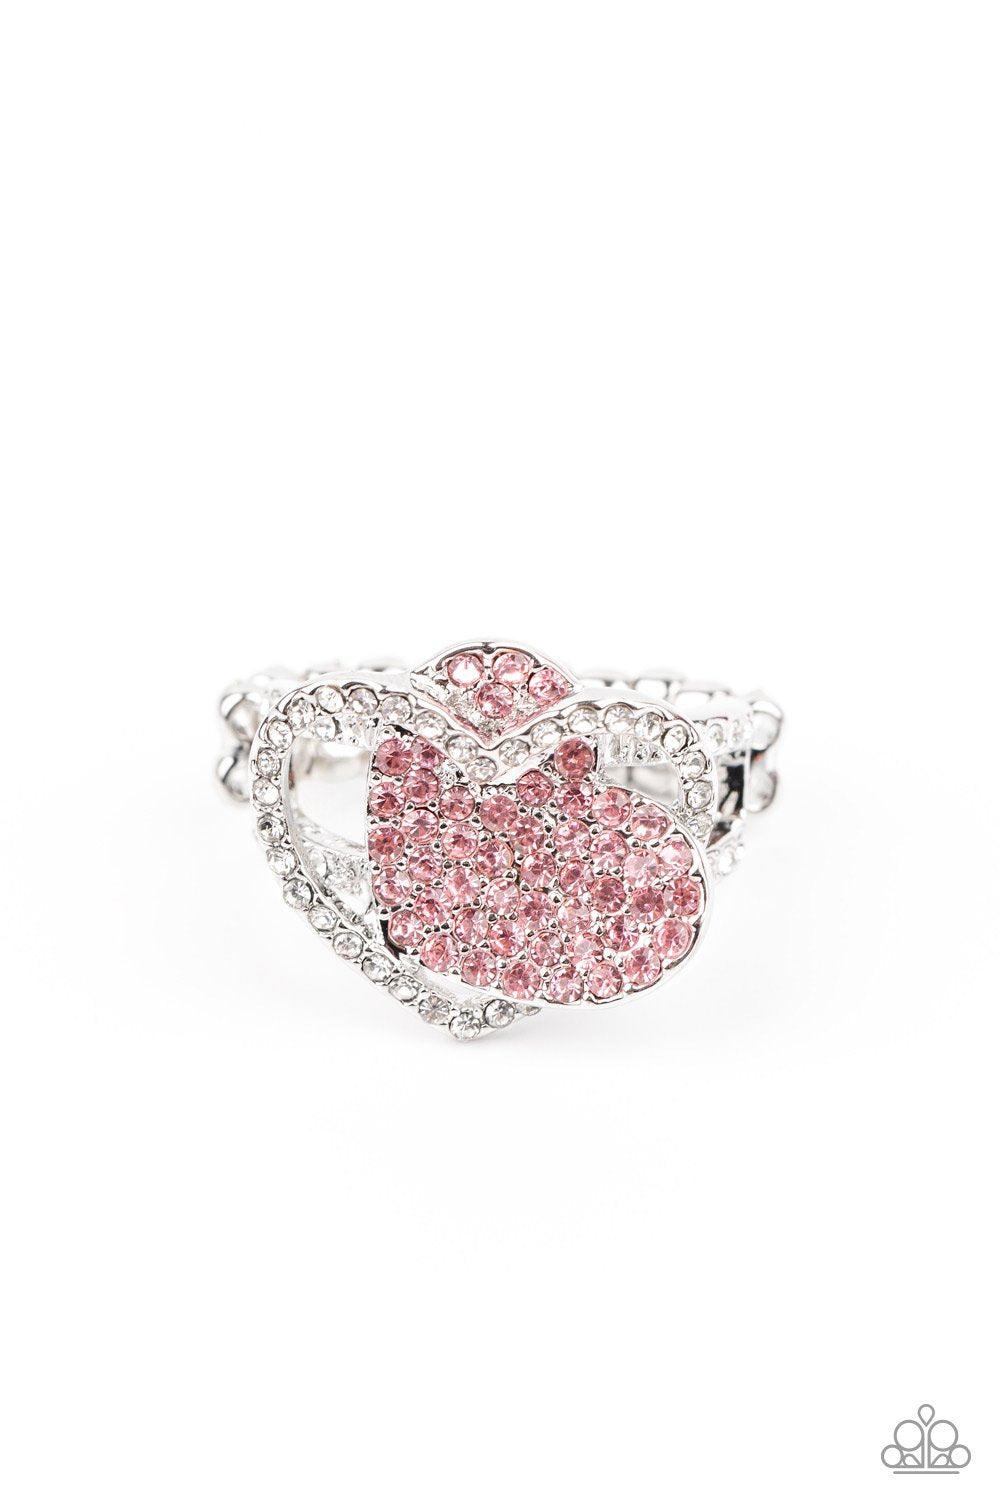 Million Dollar Matchmaker Pink Rhinestone Heart Ring - Paparazzi Accessories - lightbox -CarasShop.com - $5 Jewelry by Cara Jewels